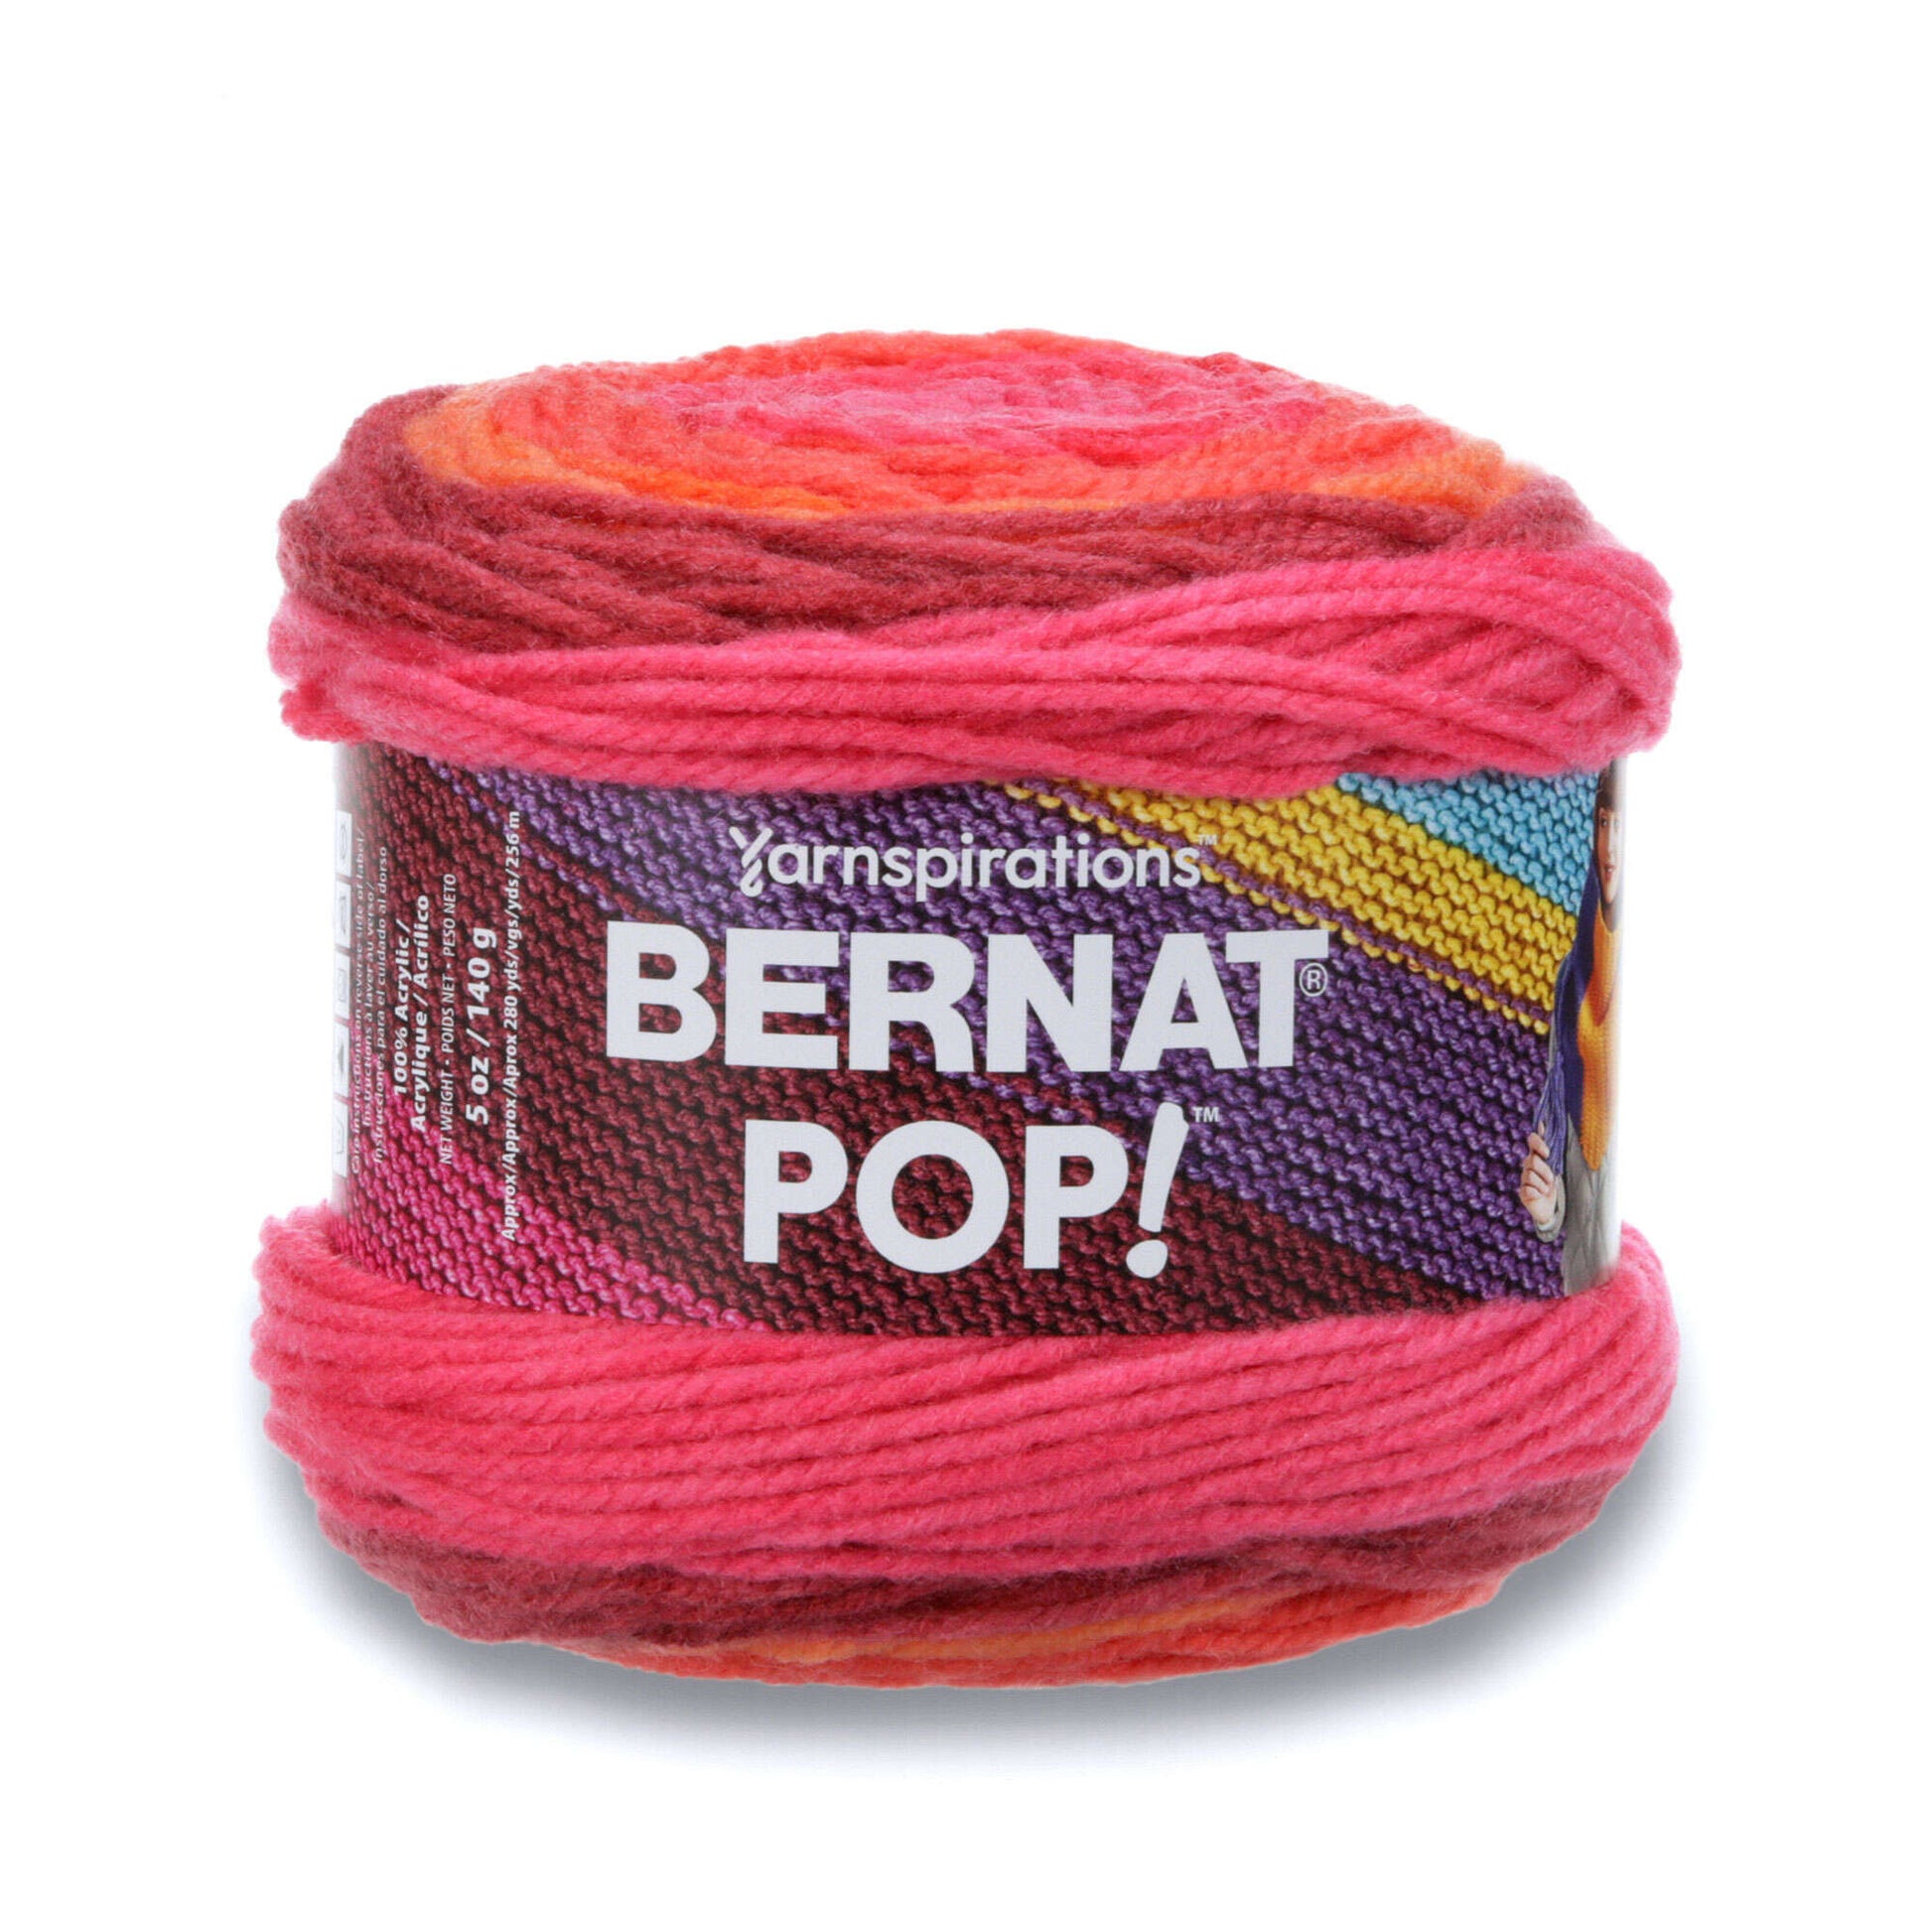 Bernat Pop! Yarn - Clearance Shades Scarlet Sizzle